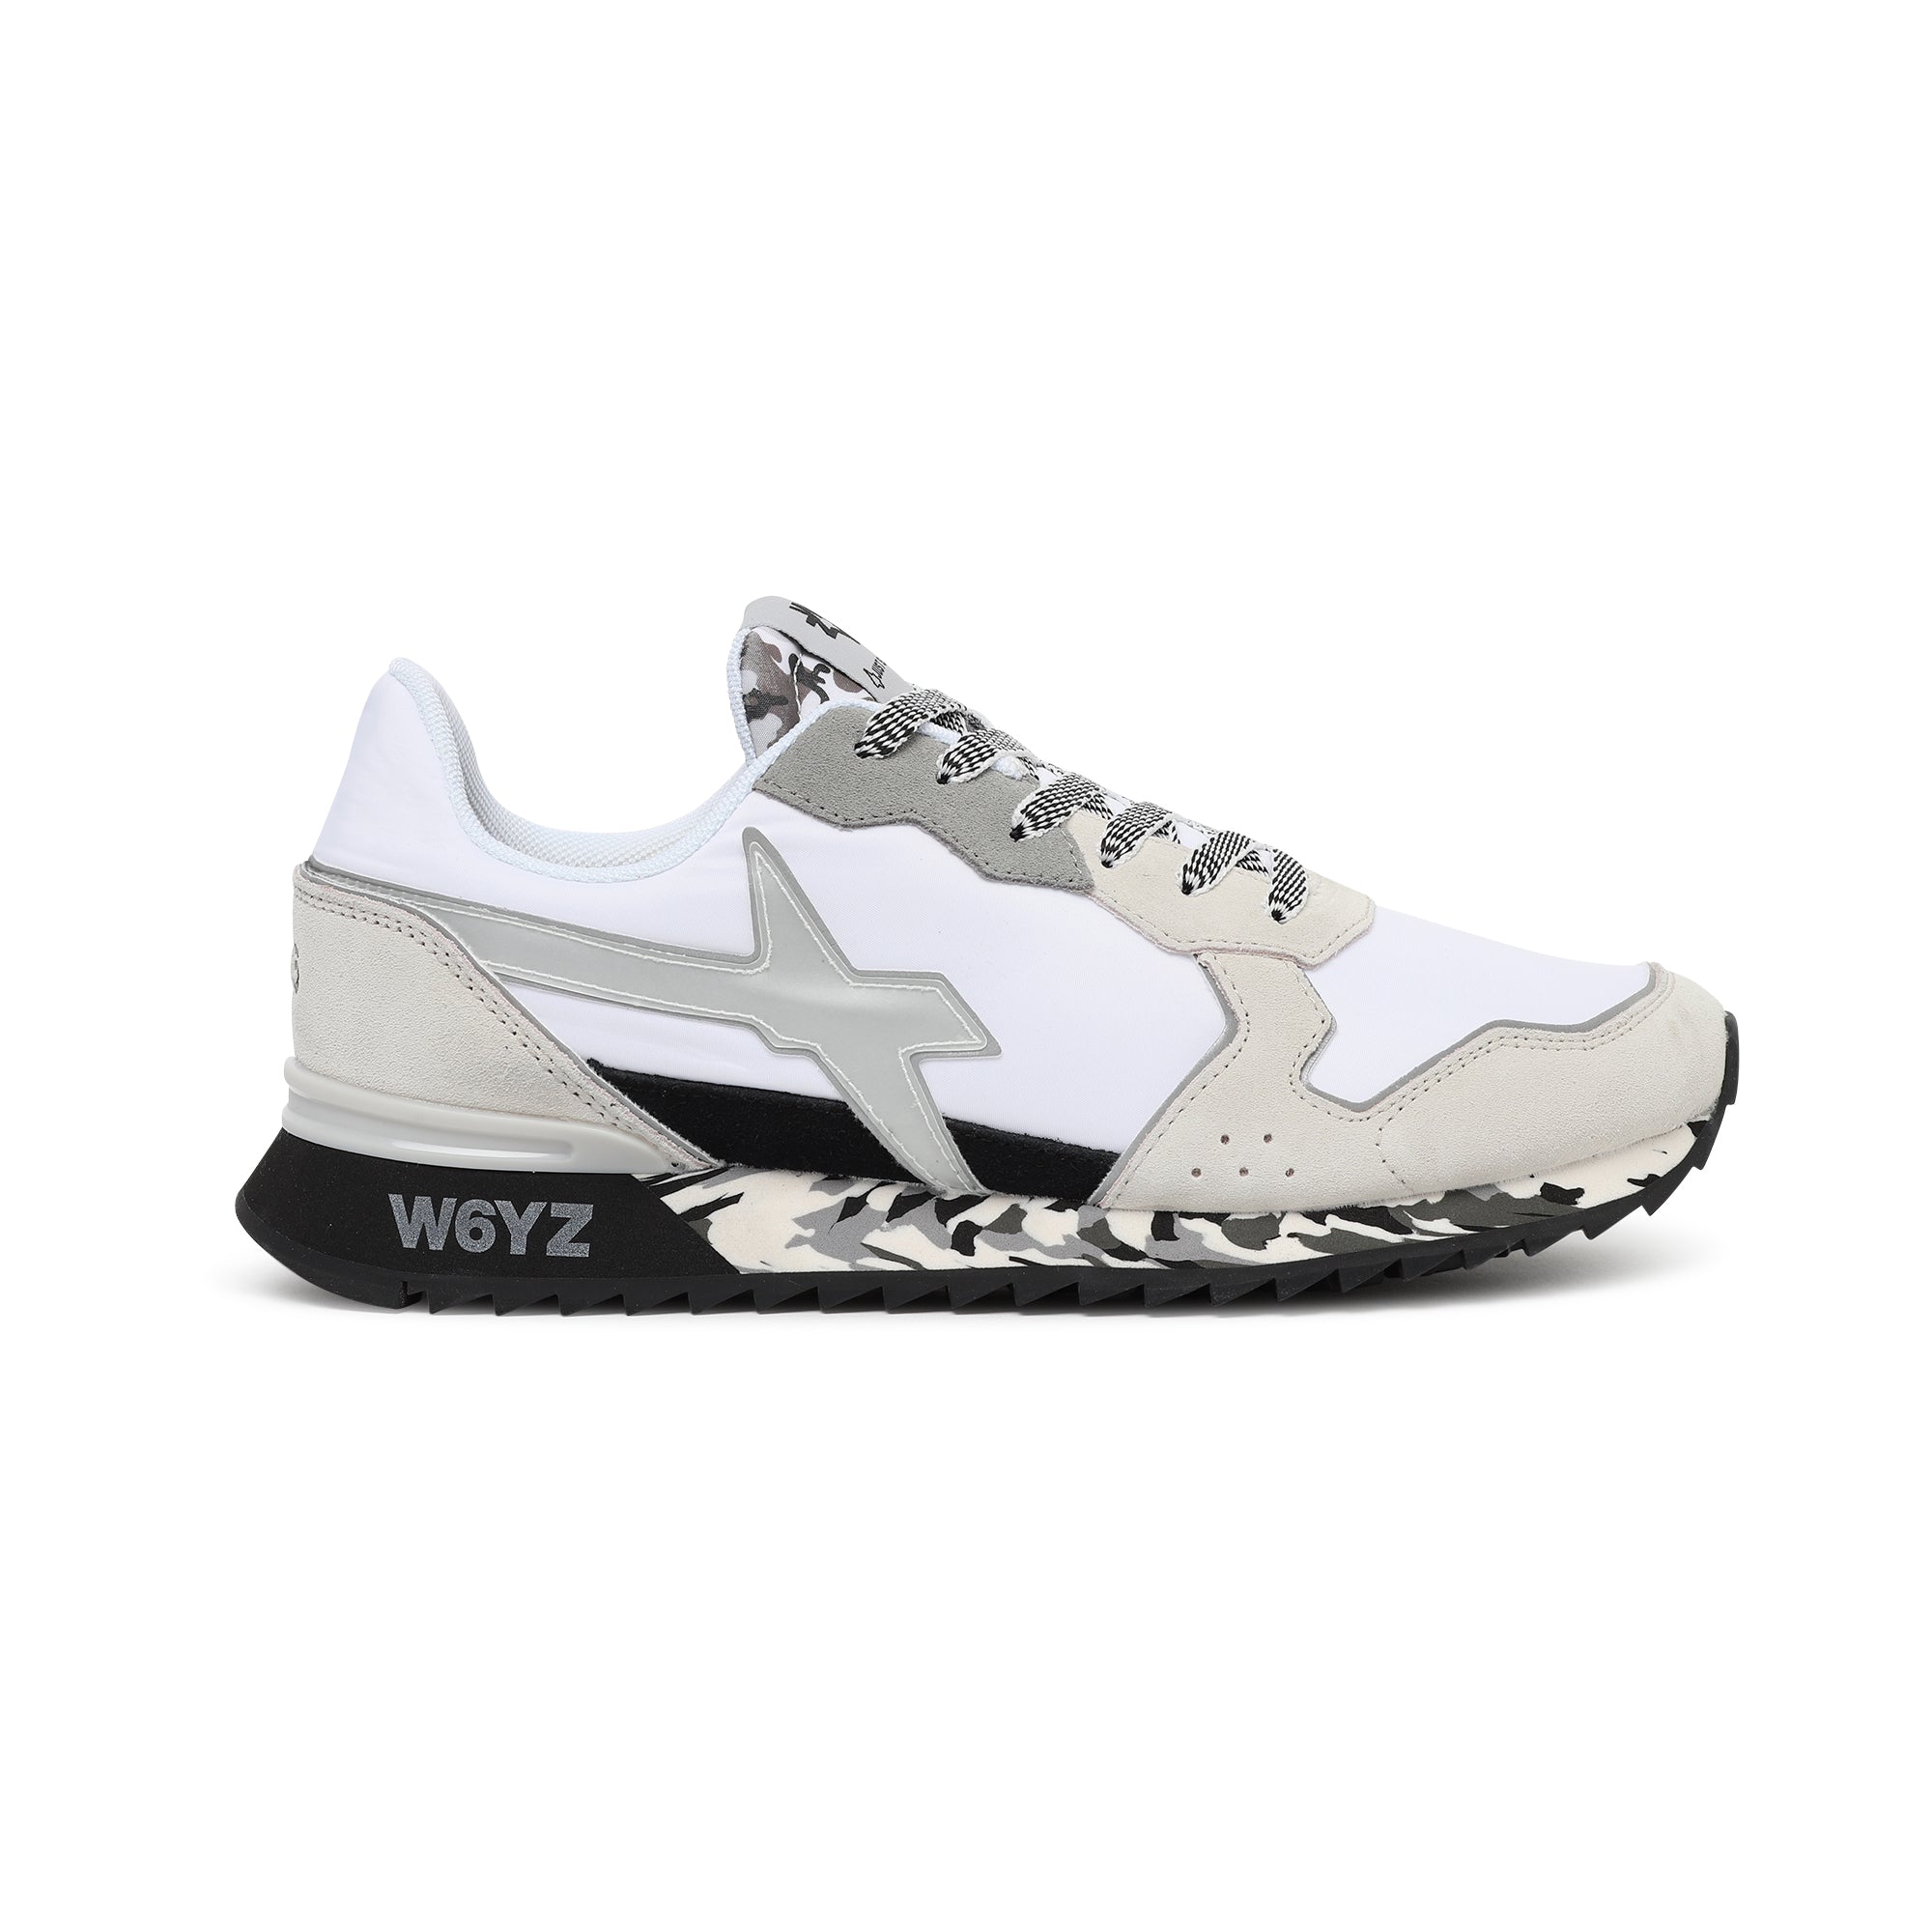 Sneakers w6yz  white-black-grey uomo 